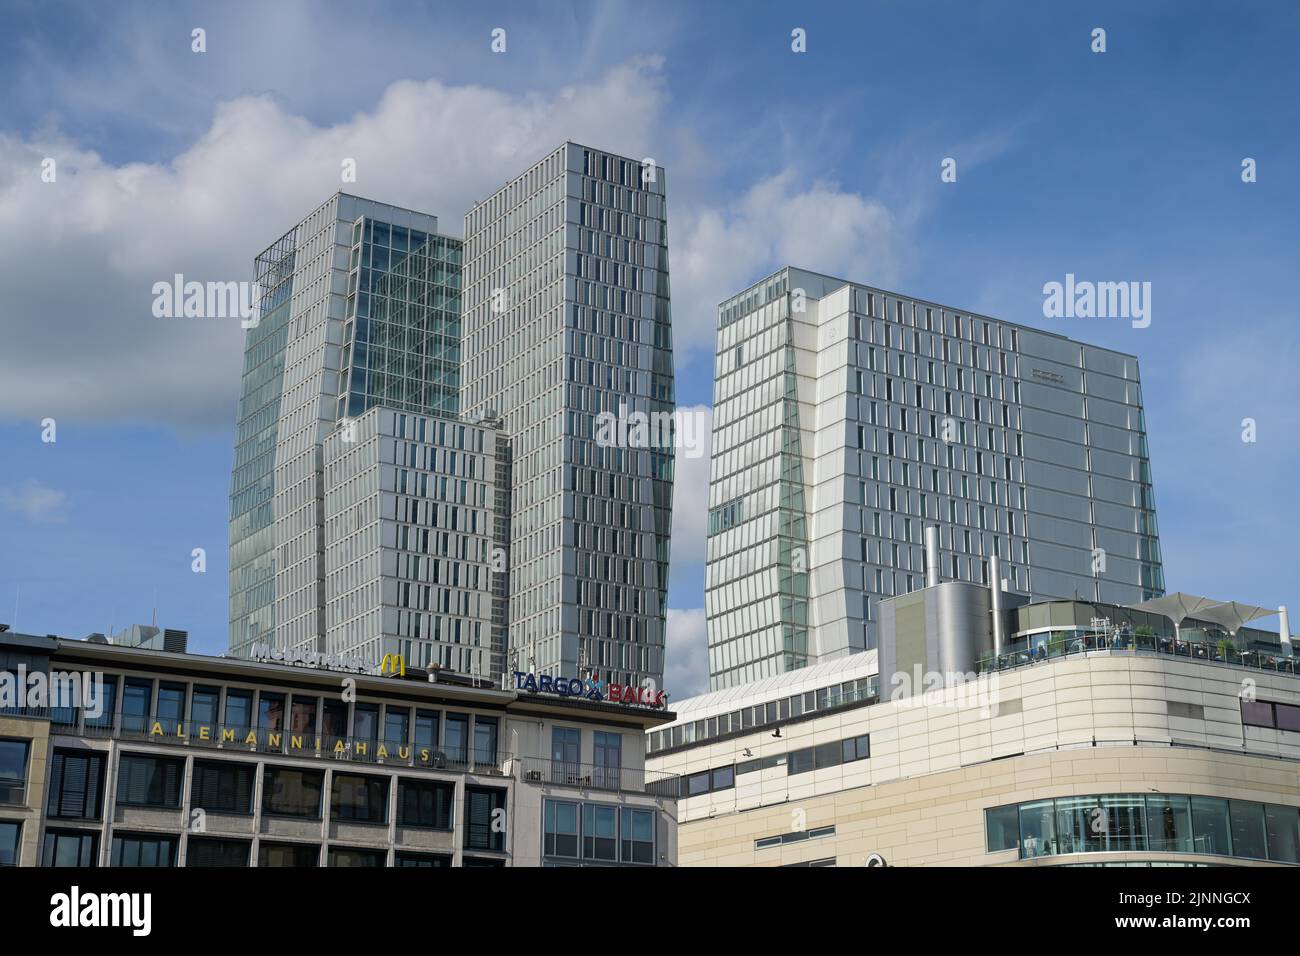 Nextower, Palaisquartier, Thurn-und-Taxis-Platz, Frankfurt am Main, Hesse, Germany Stock Photo